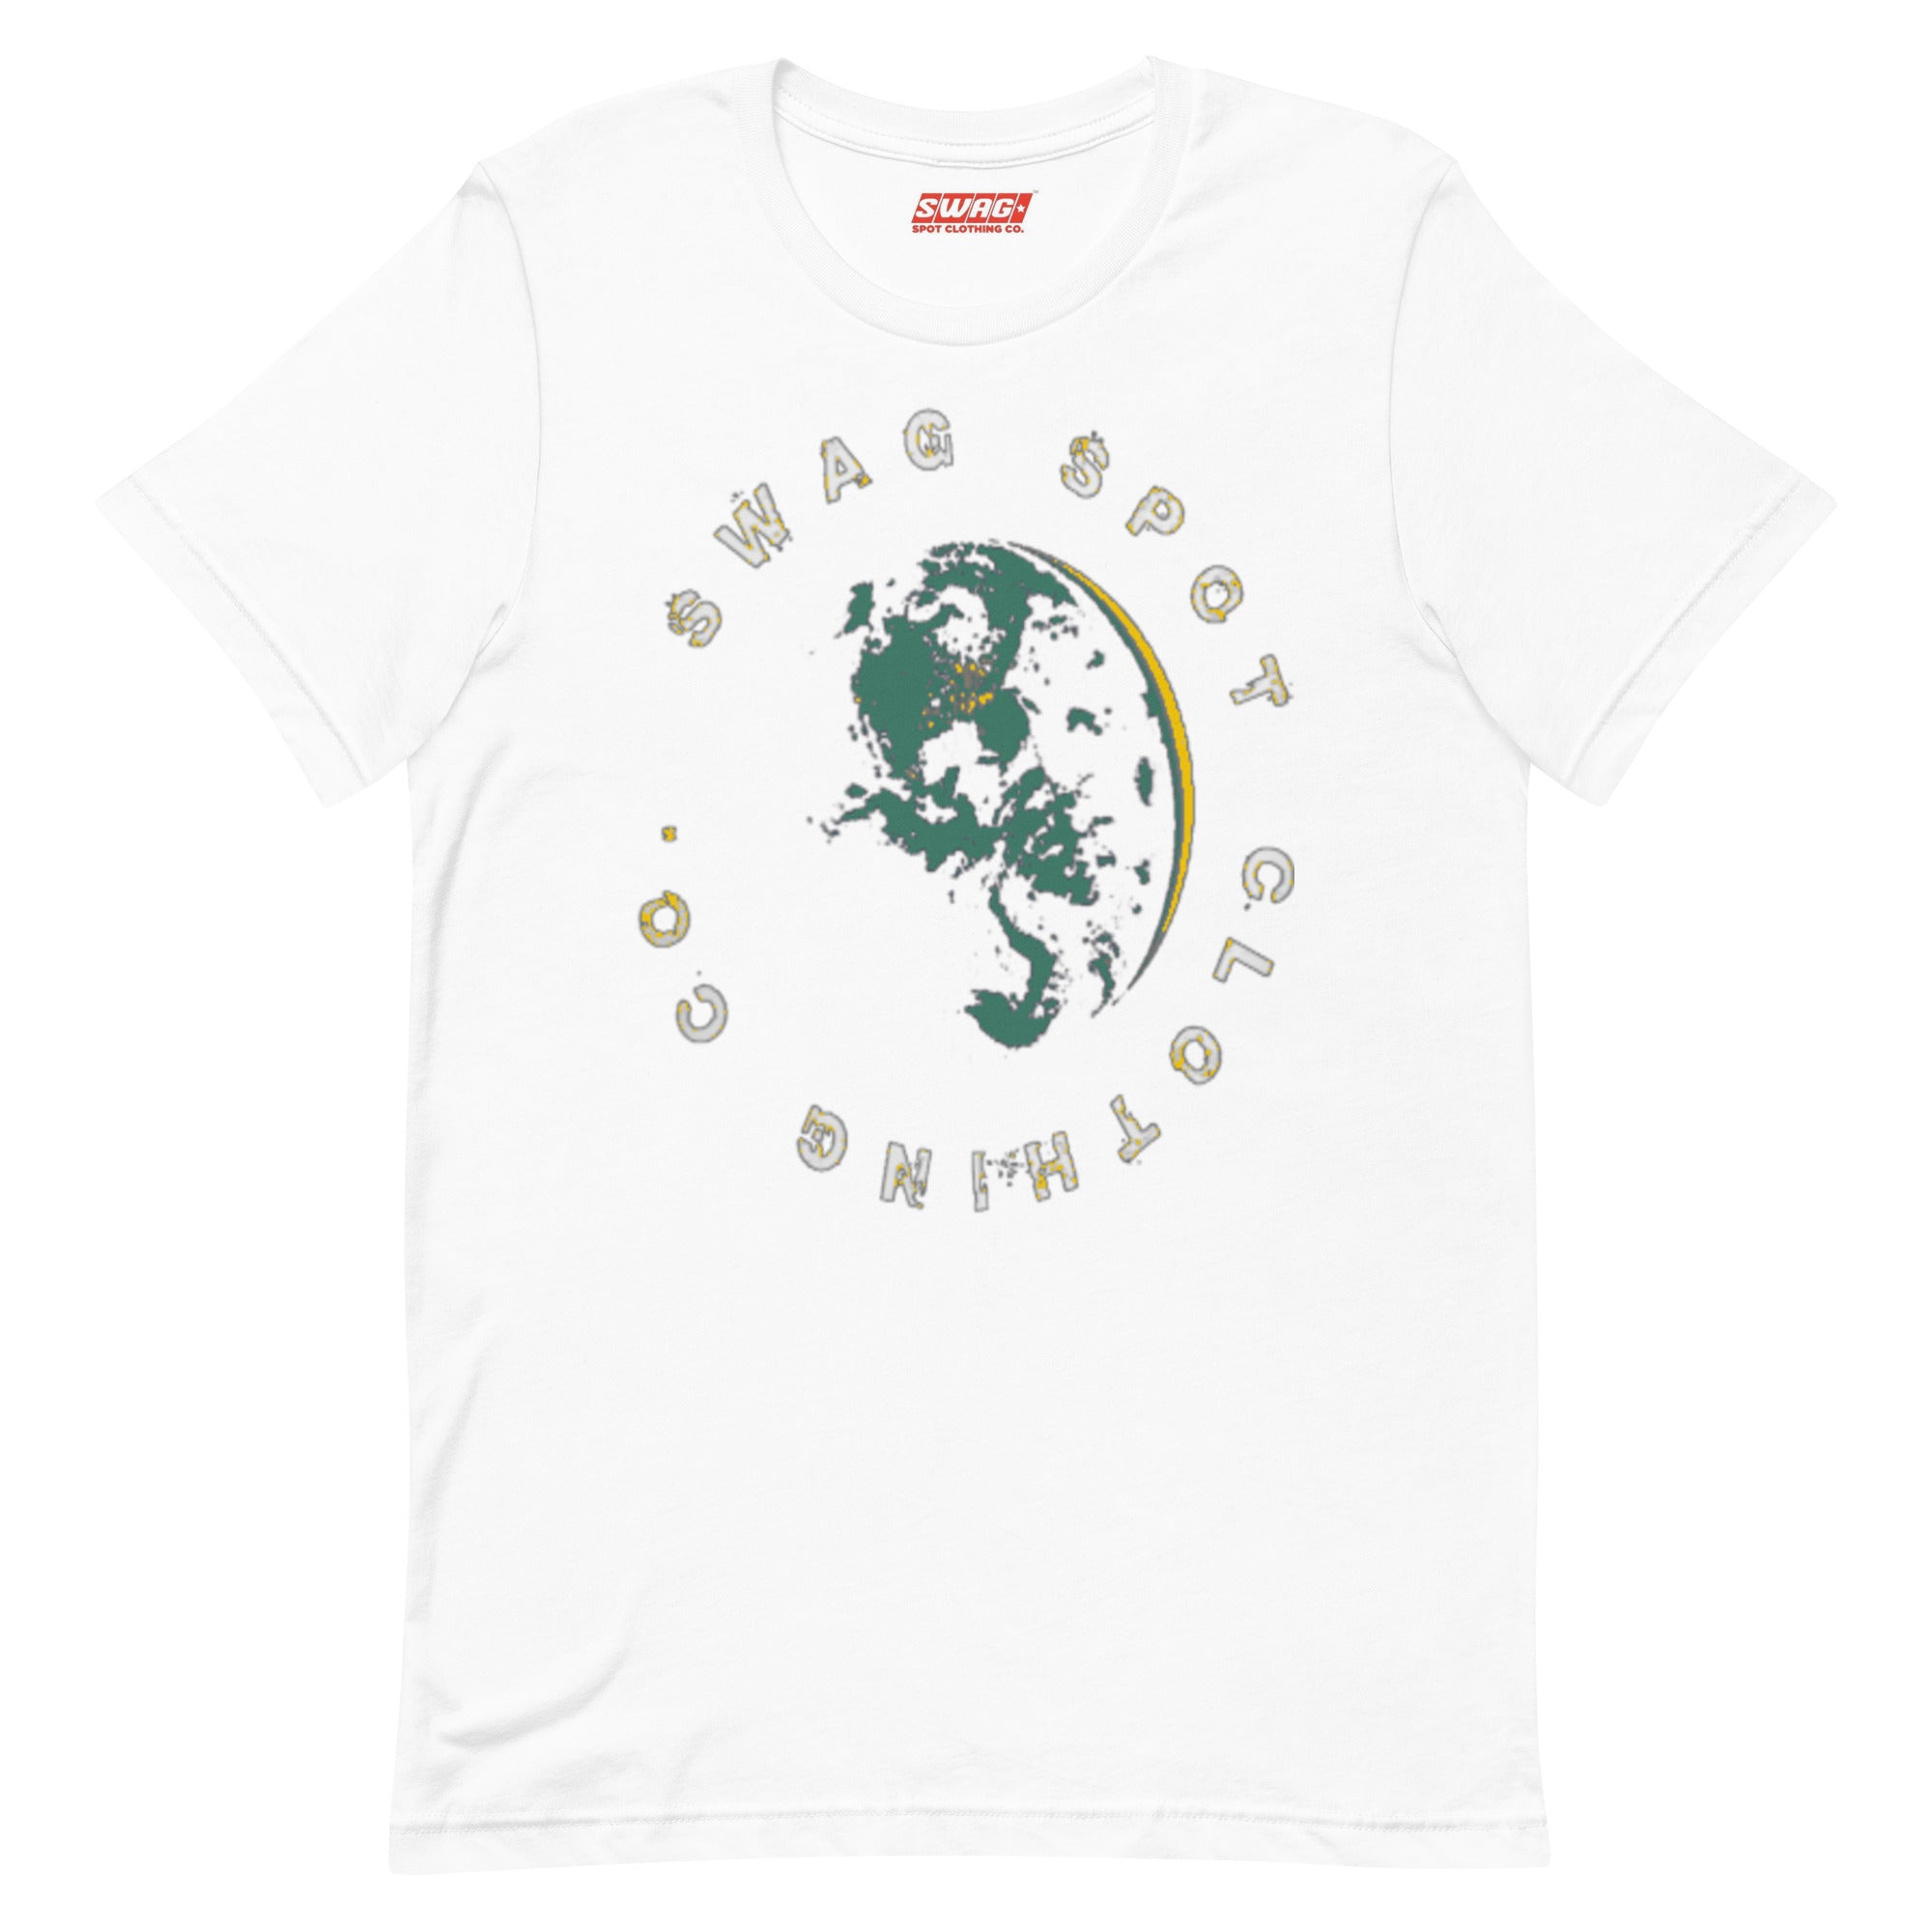 Swag World Green Graphics Unisex t-shirt